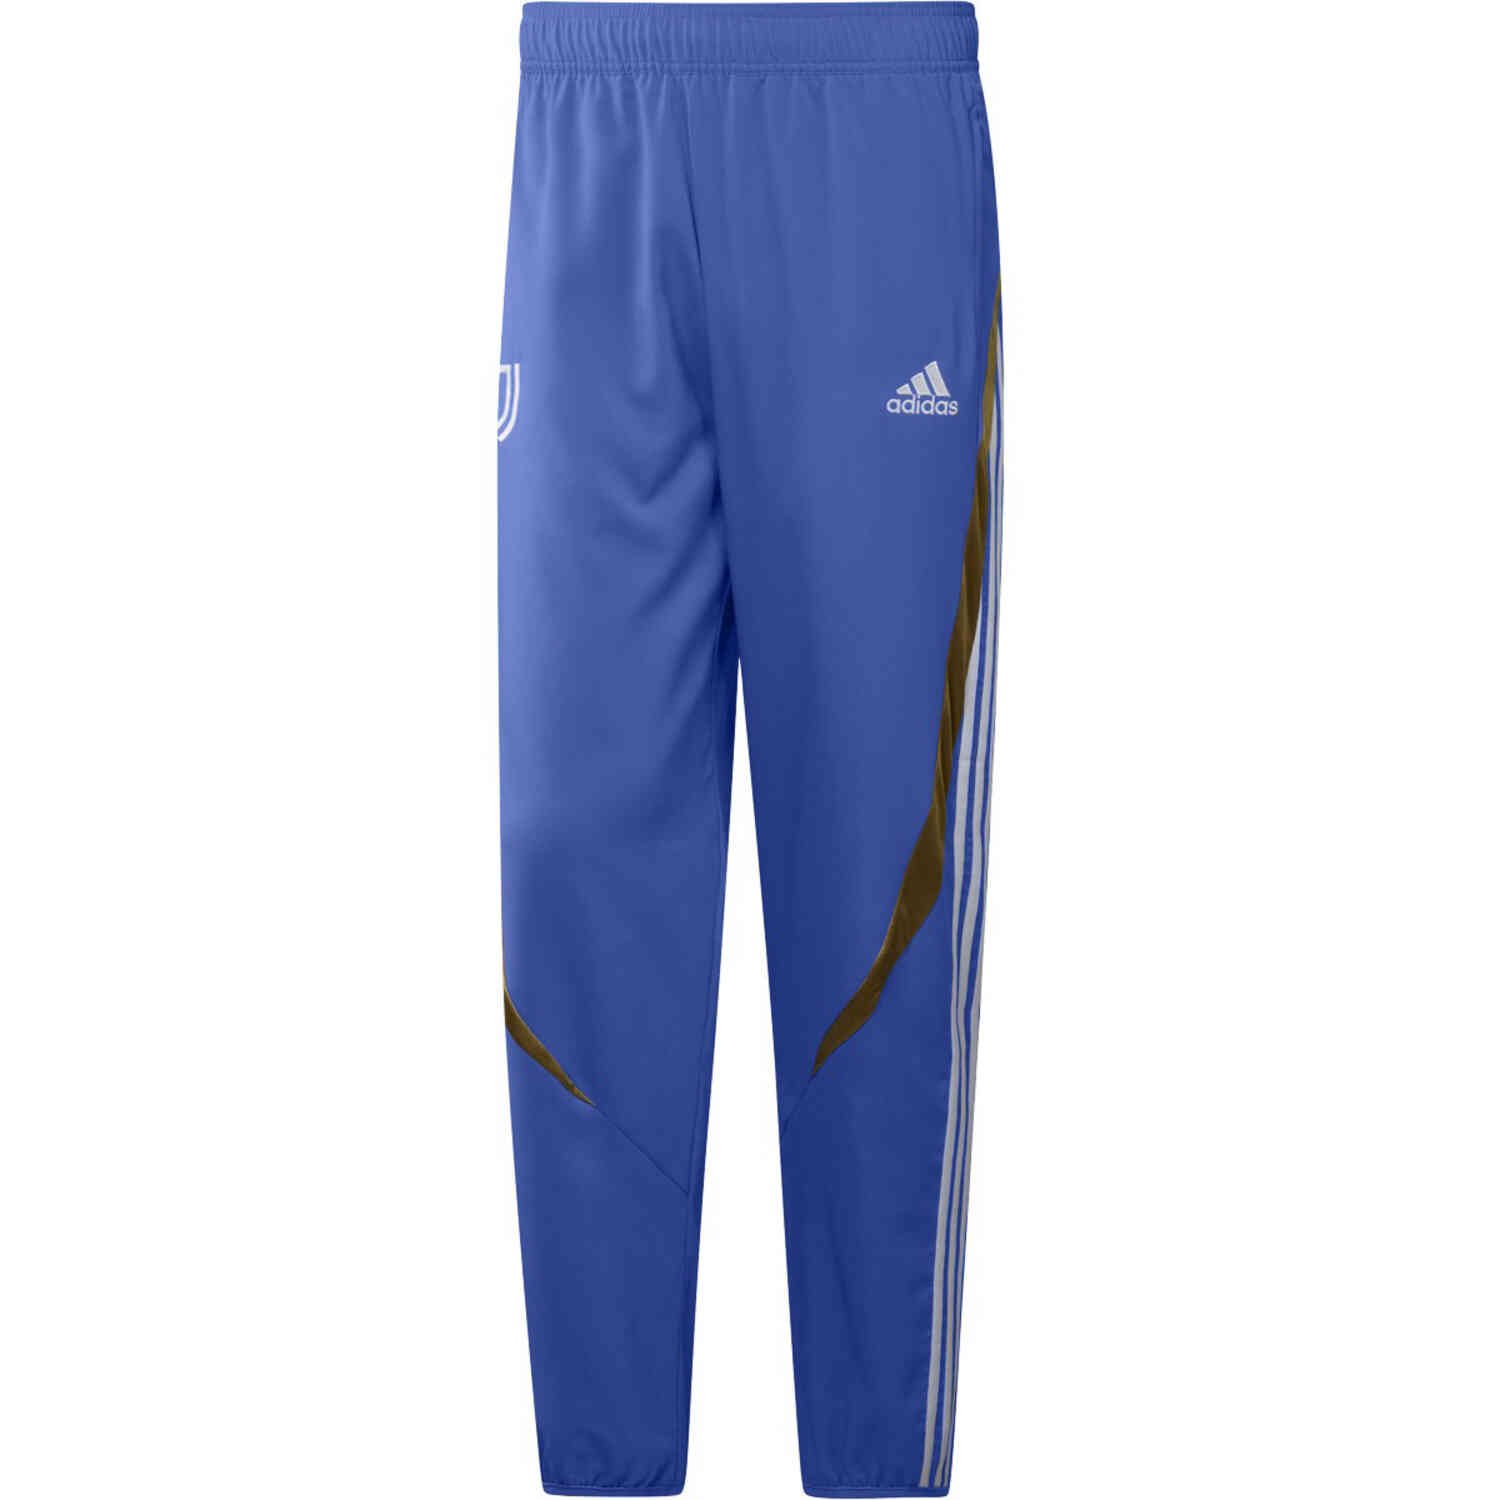 adidas Juventus Teamgeist Woven Pants Hi-res Blue SoccerPro